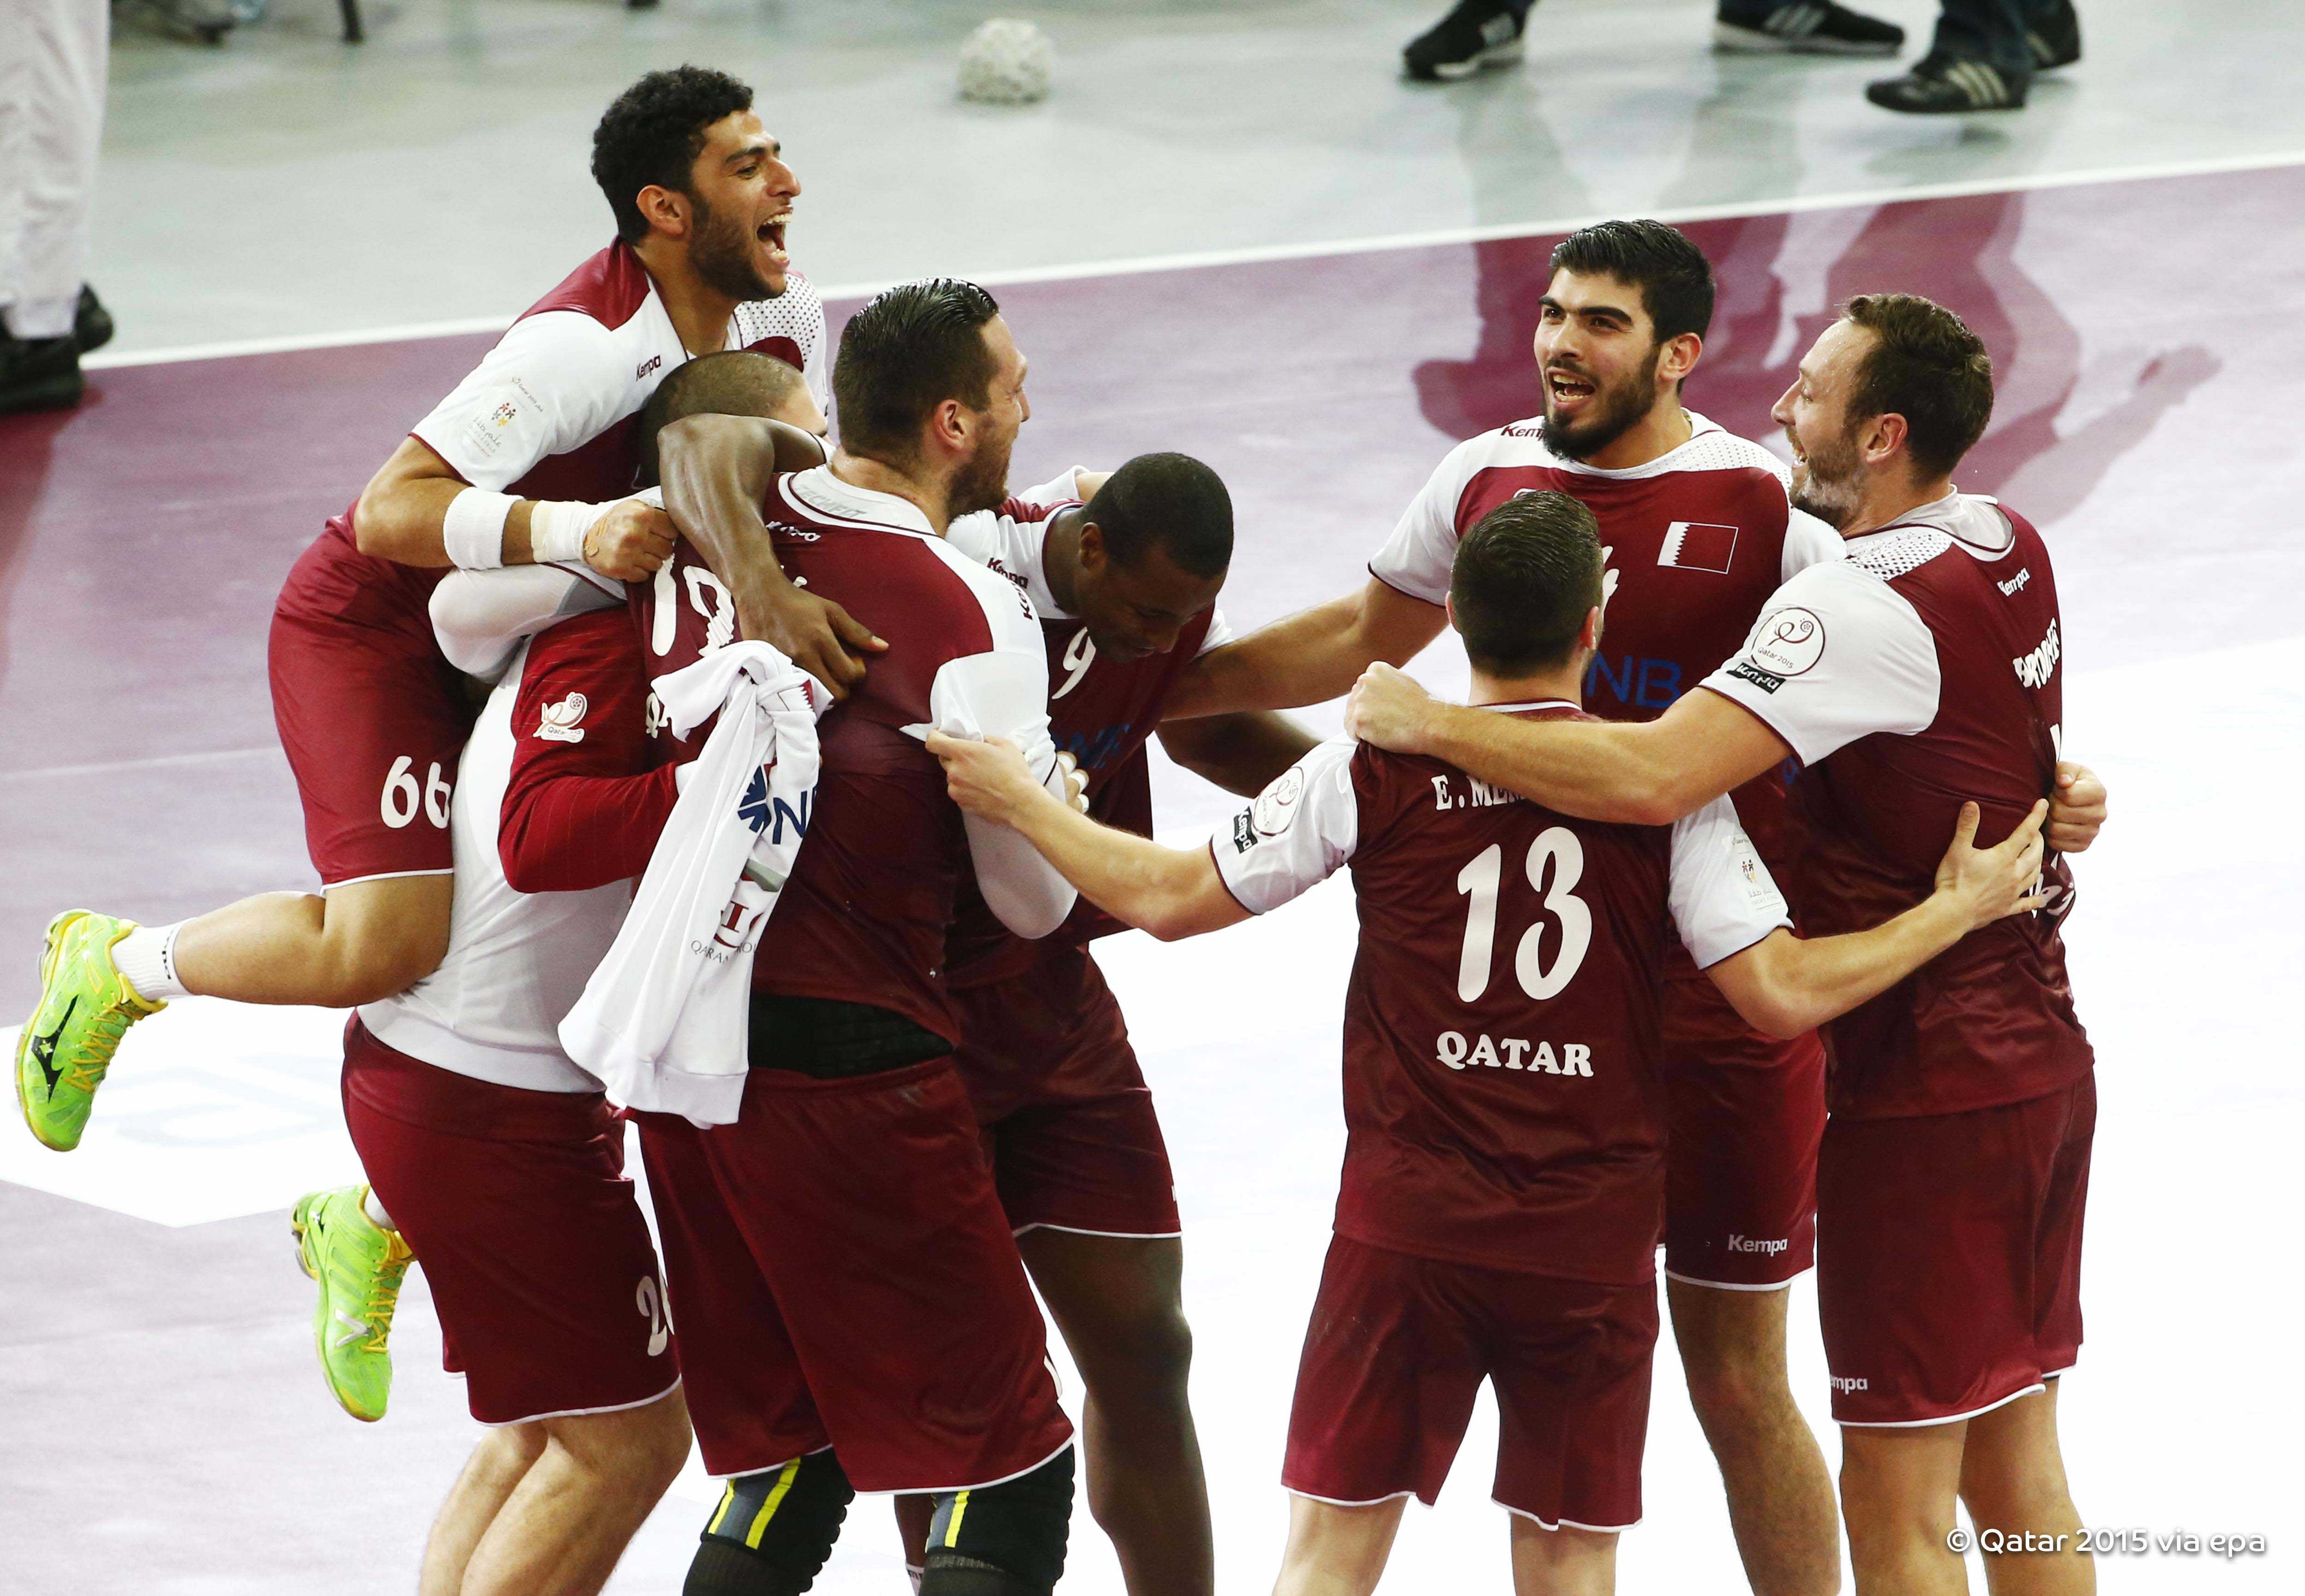 Qatari players celebrate after winning the Qatar 2015 24th Men's Handball World Championship semi final between Poland and Qatar in January 2015. 